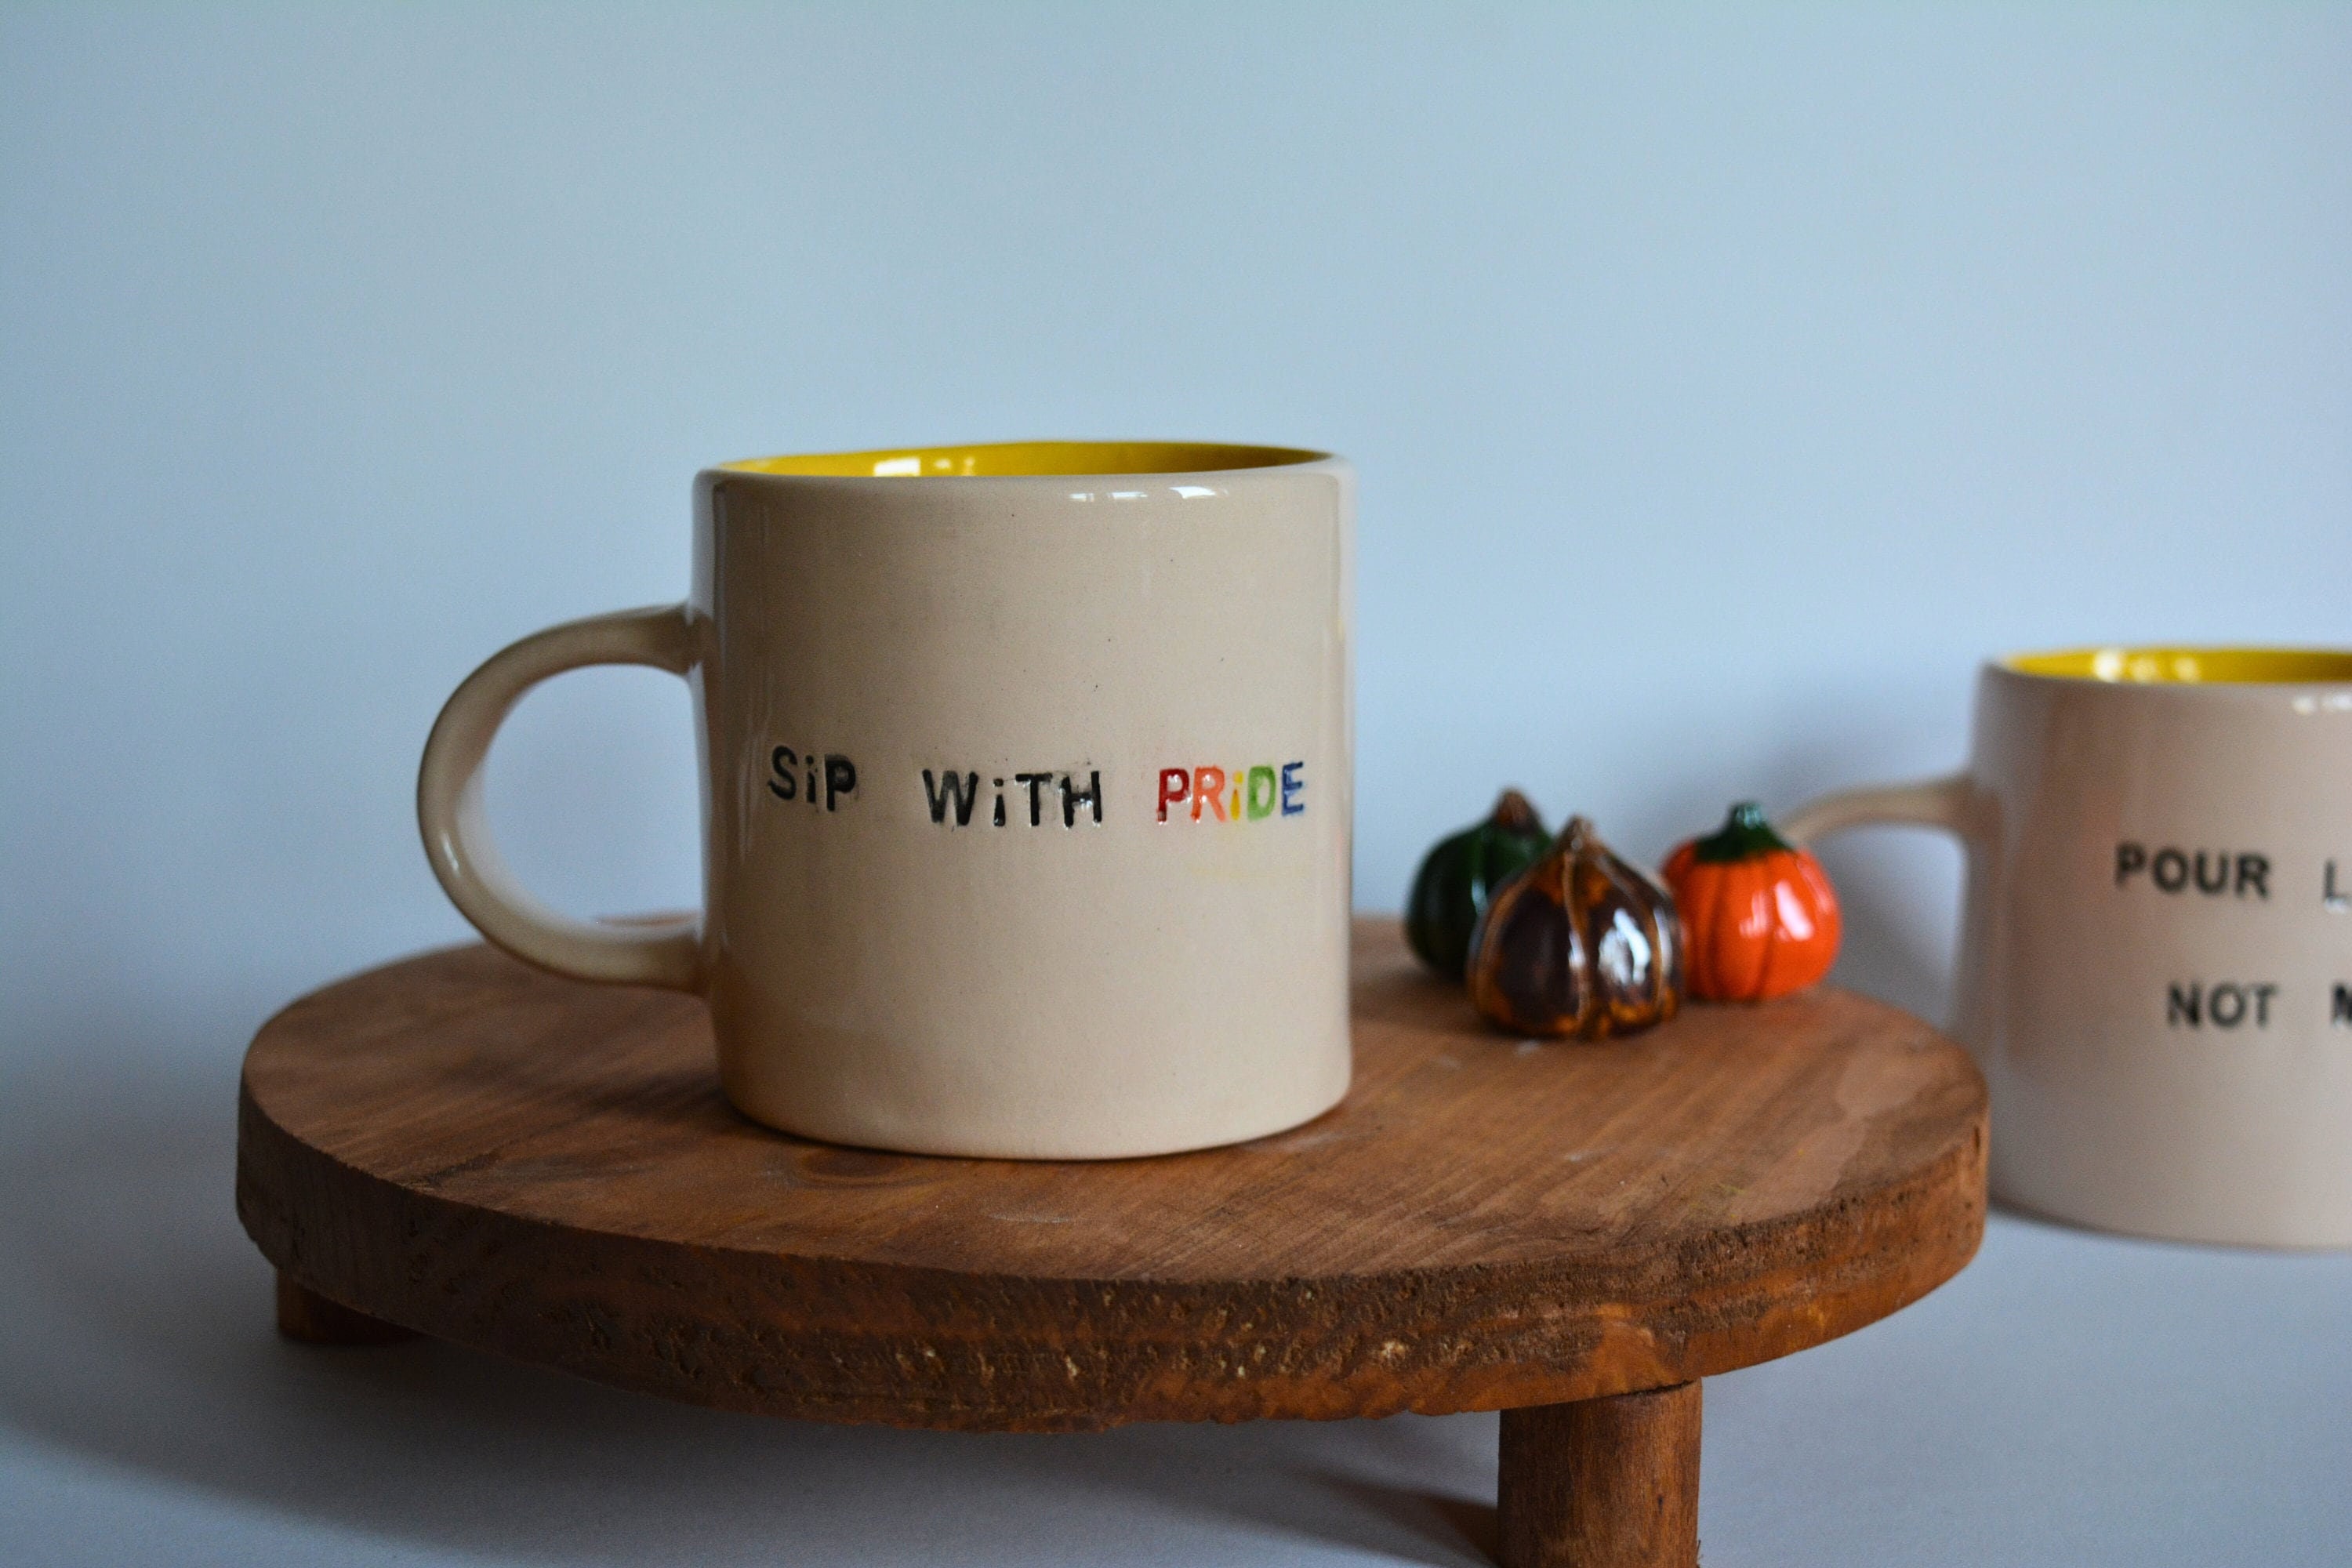 Cute Mugs for Achieving Cozy Queer Aesthetic Goals